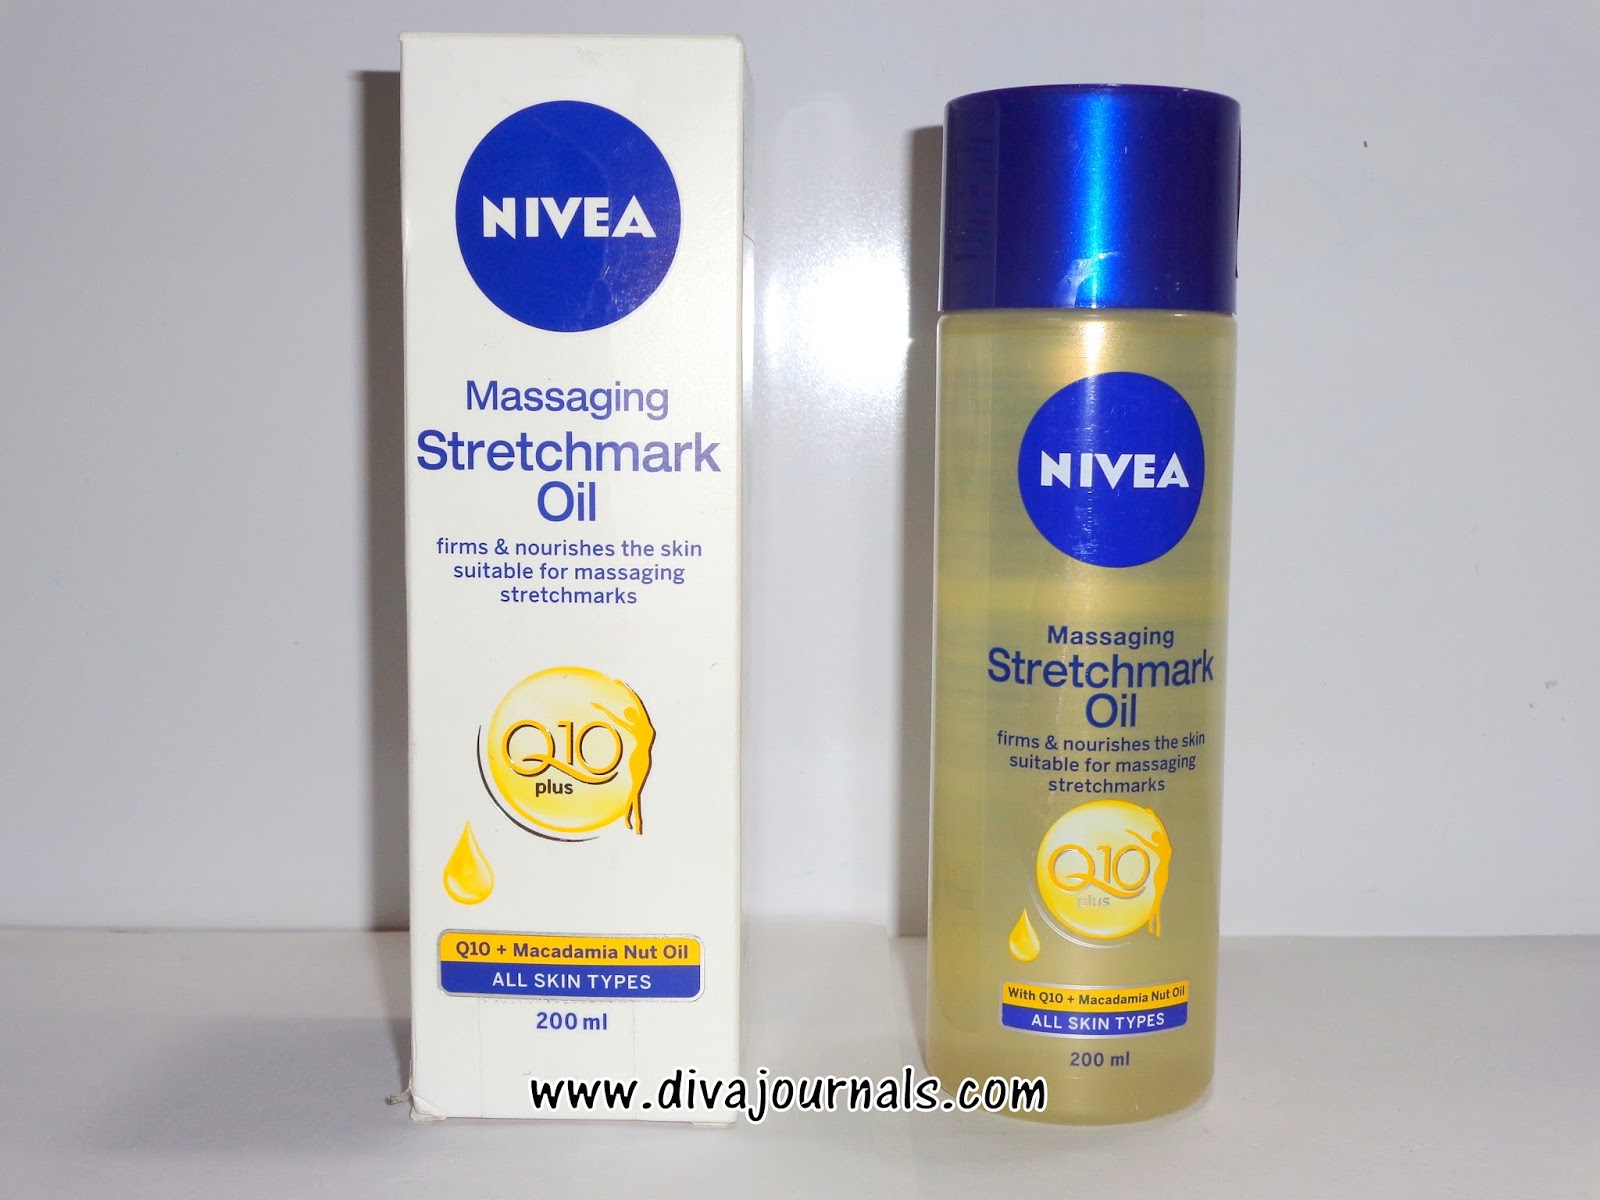 Pionier Accountant Knooppunt Nivea Q10 Plus Massaging Stretchmark Oil Review